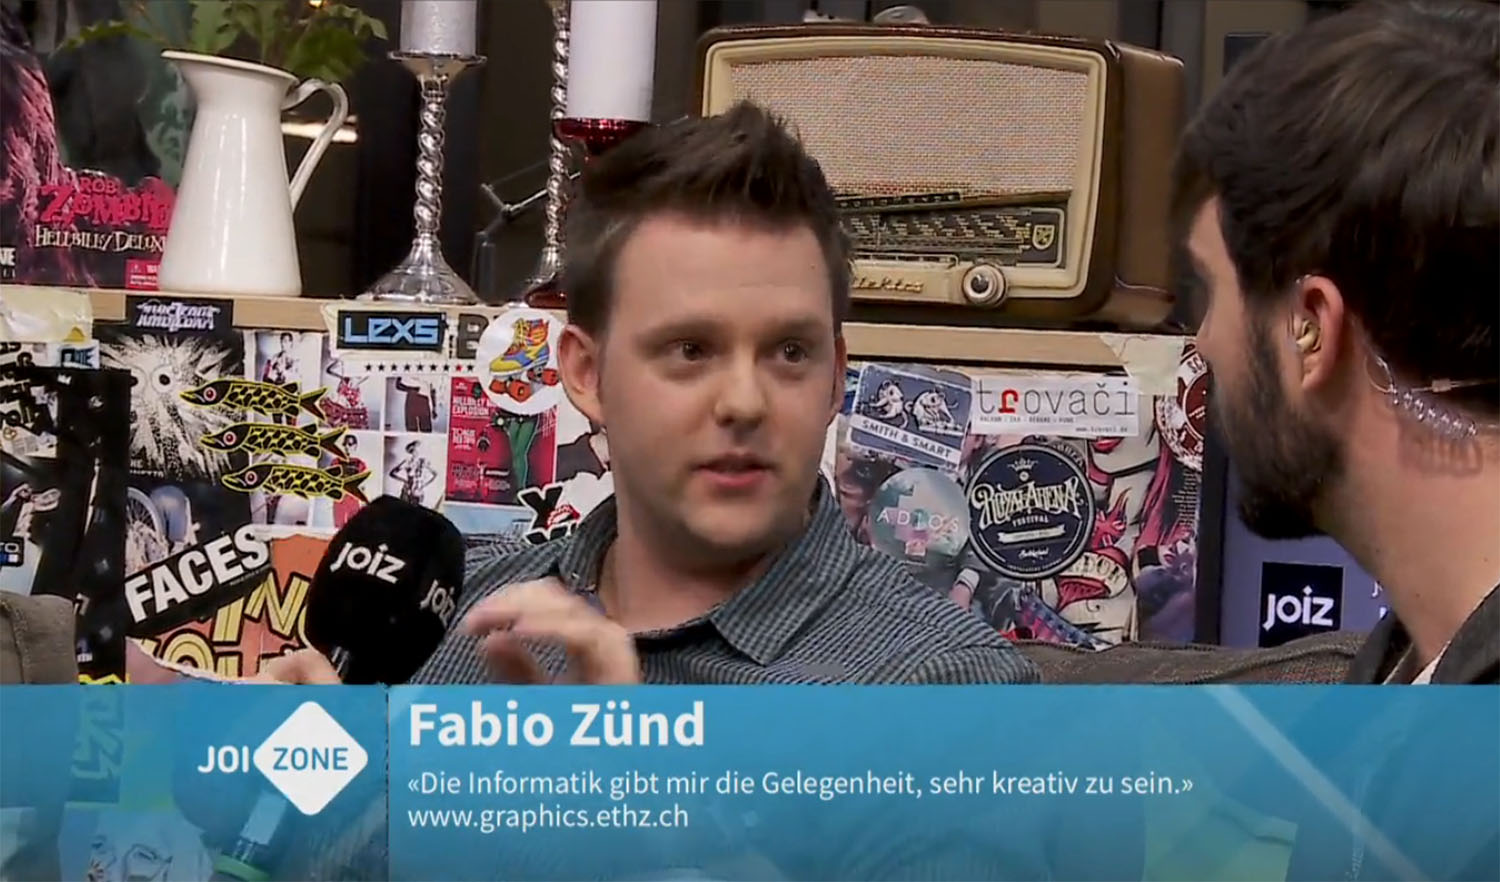 Enlarged view: Fabio Zünd on Joiz